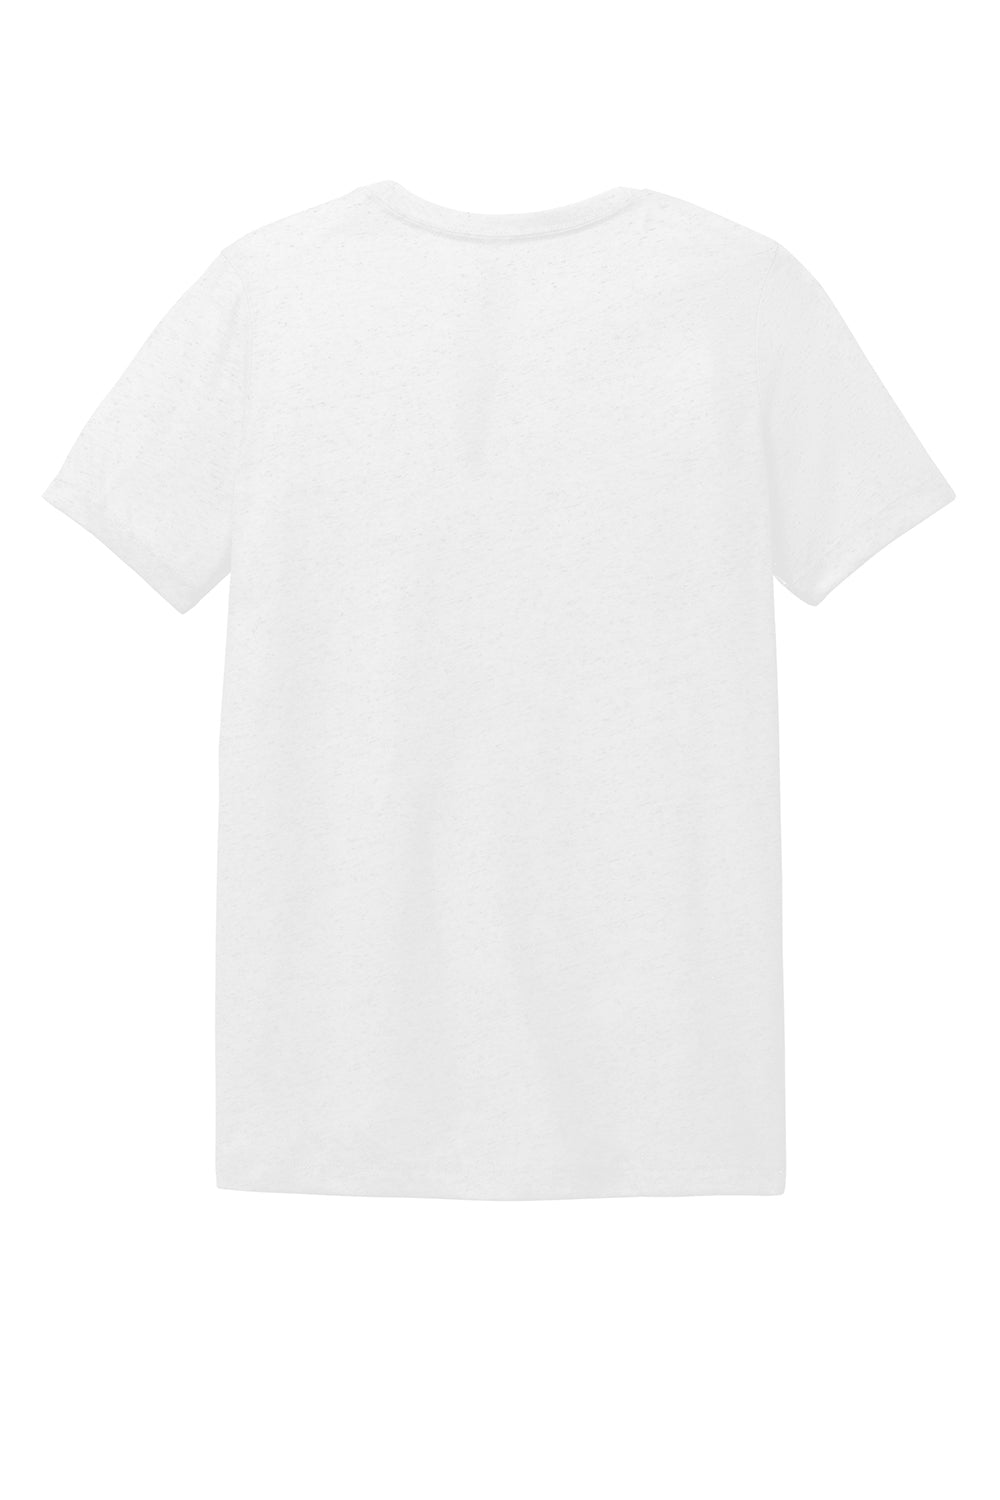 Bella + Canvas BC6413 Womens Short Sleeve Crewneck T-Shirt Solid White Flat Back